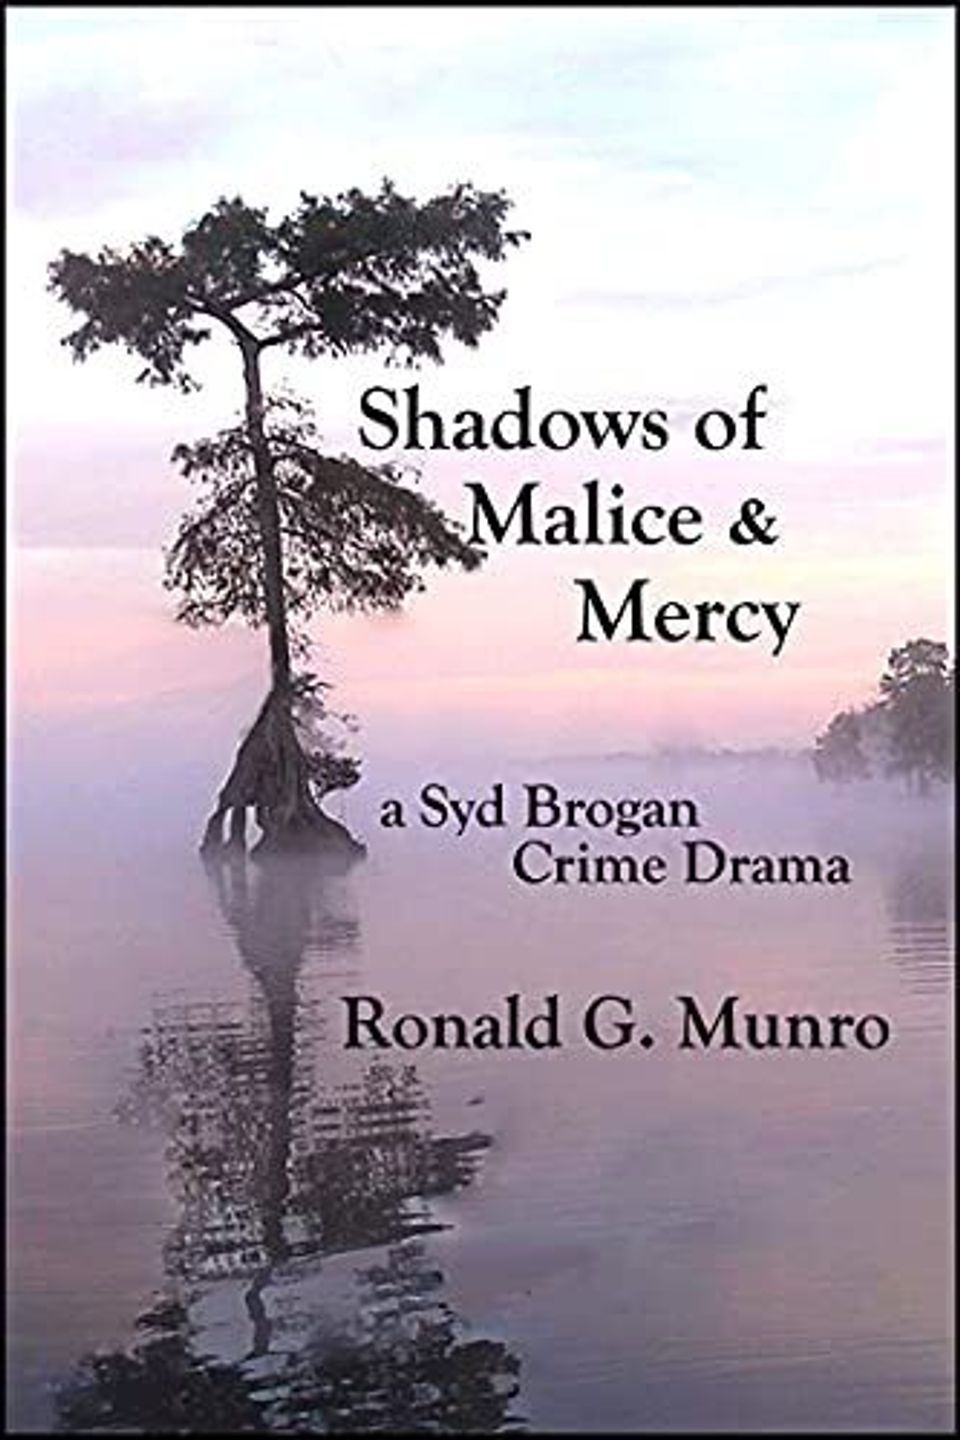 Shadows of malice